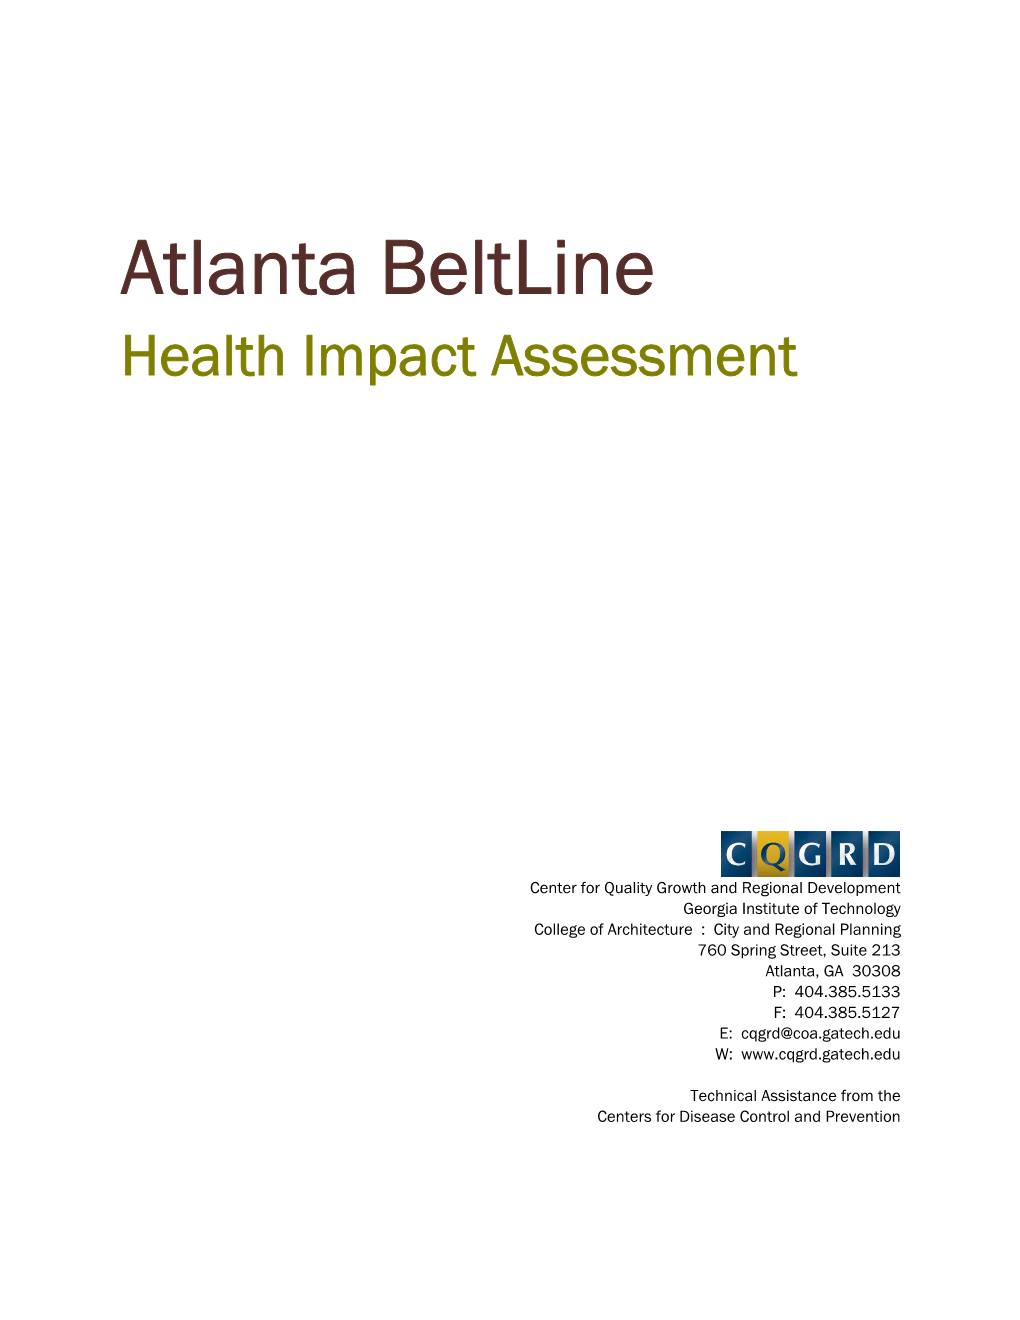 Atlanta Beltline Health Impact Assessment